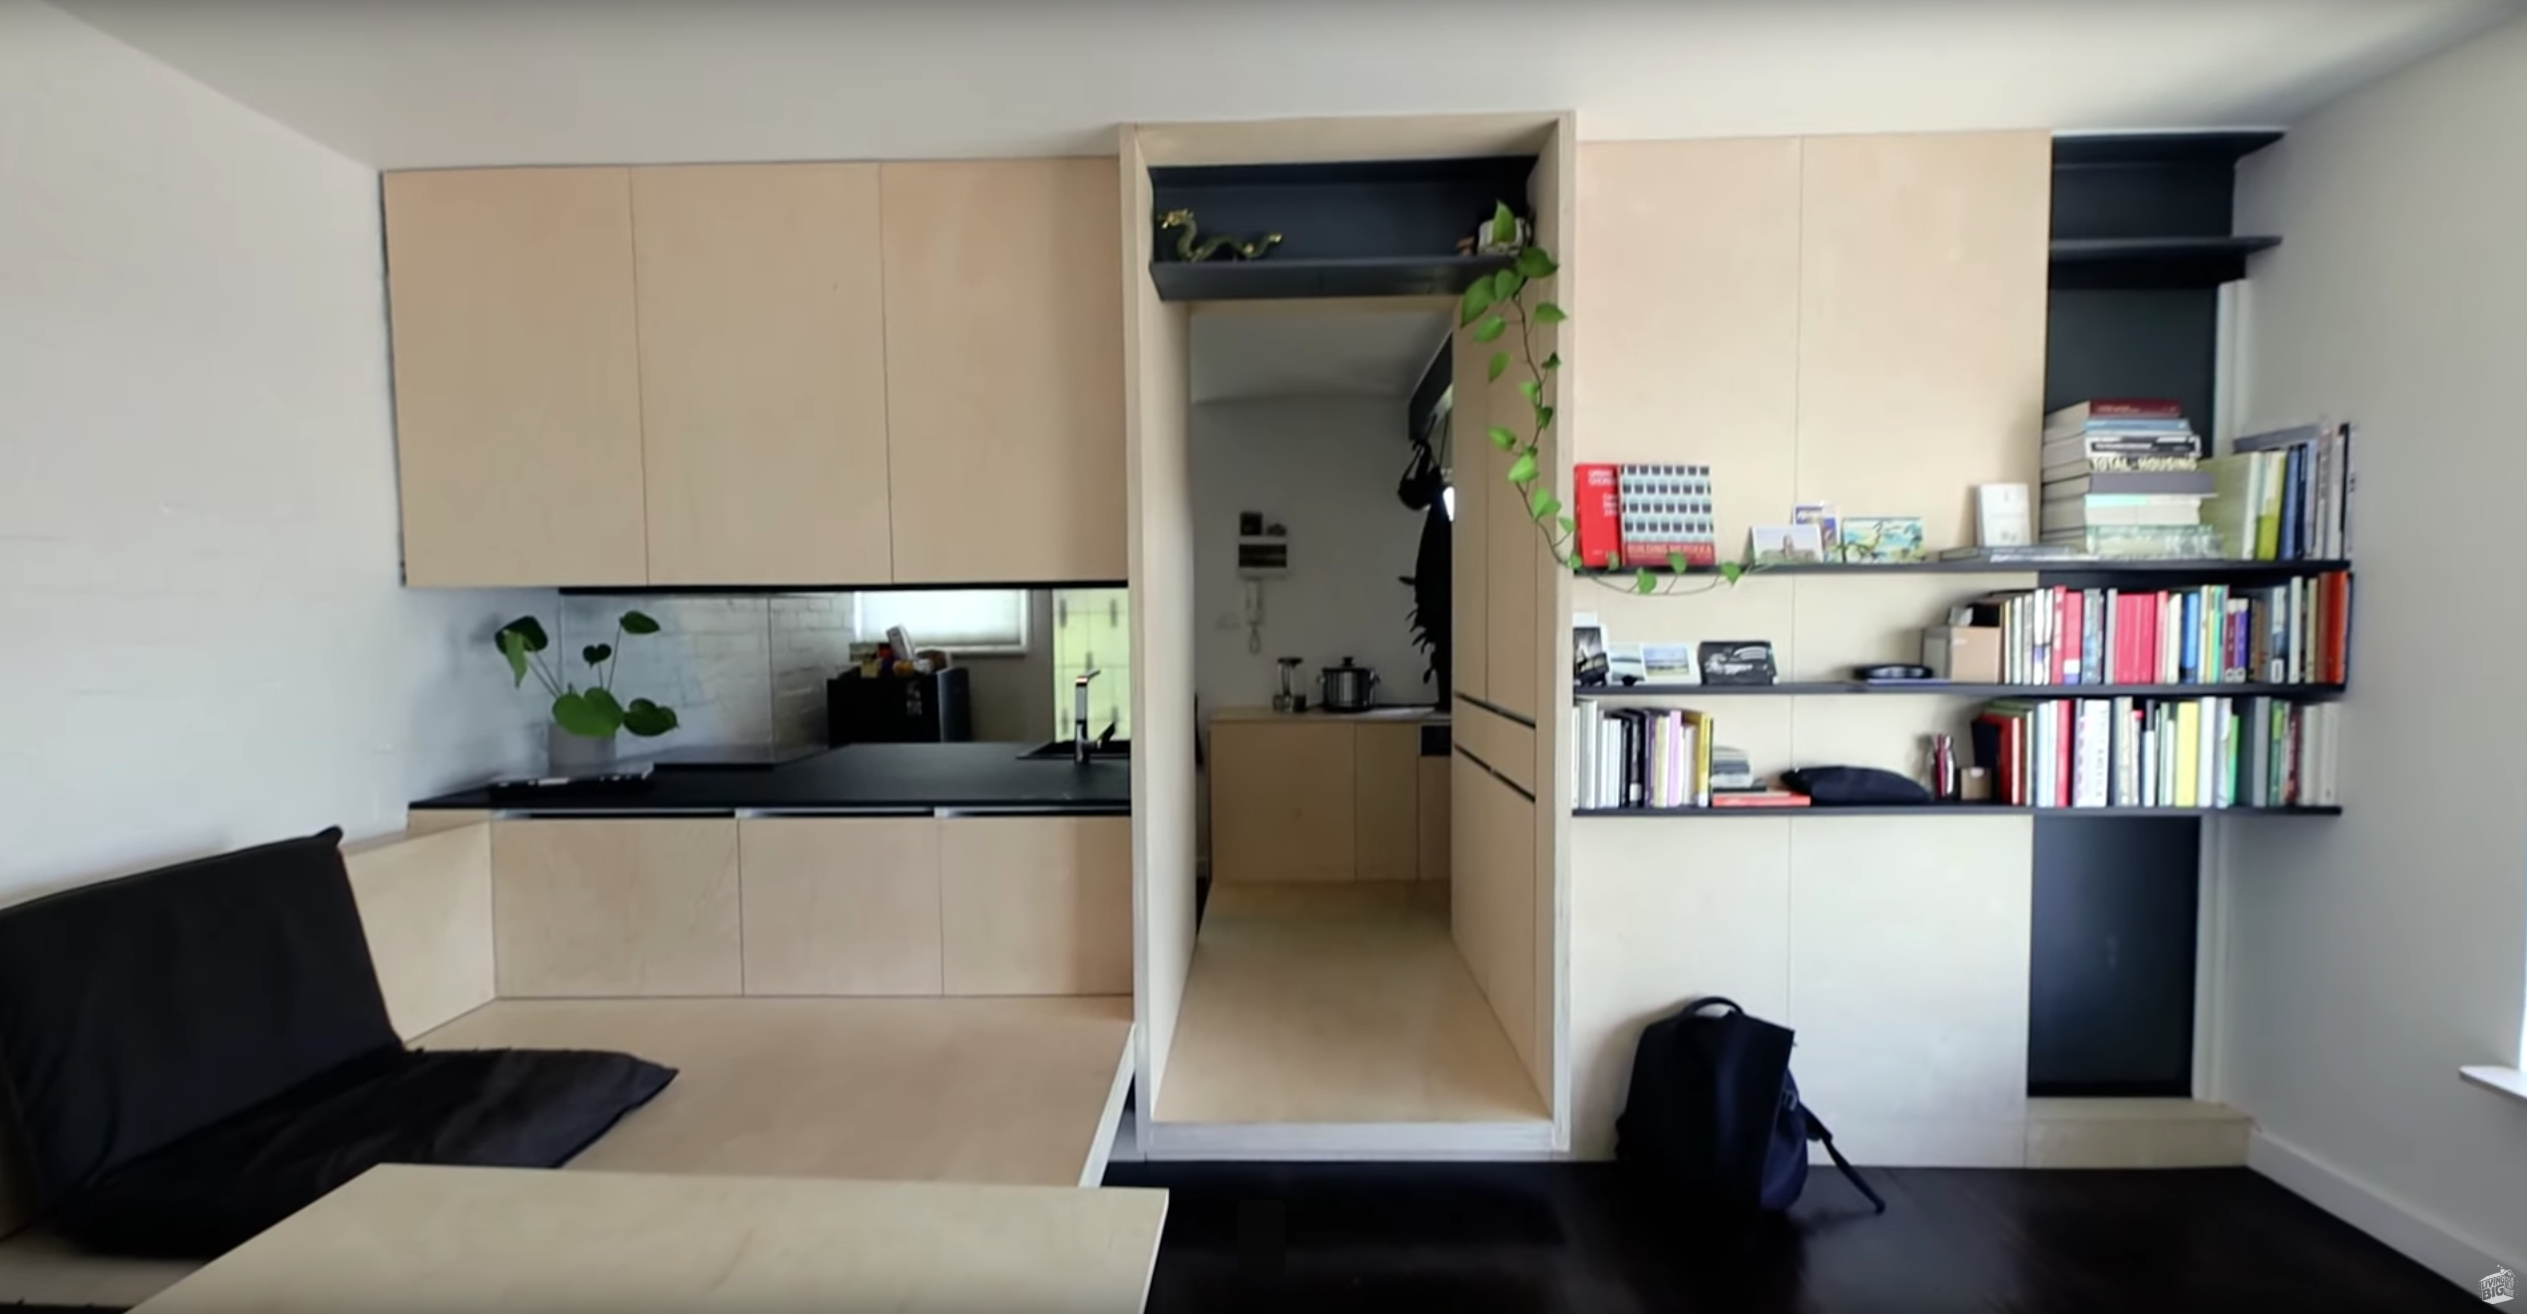 This 300 Square Foot Apartment Makes A Small E Seem Huge Architect Douglas Wan